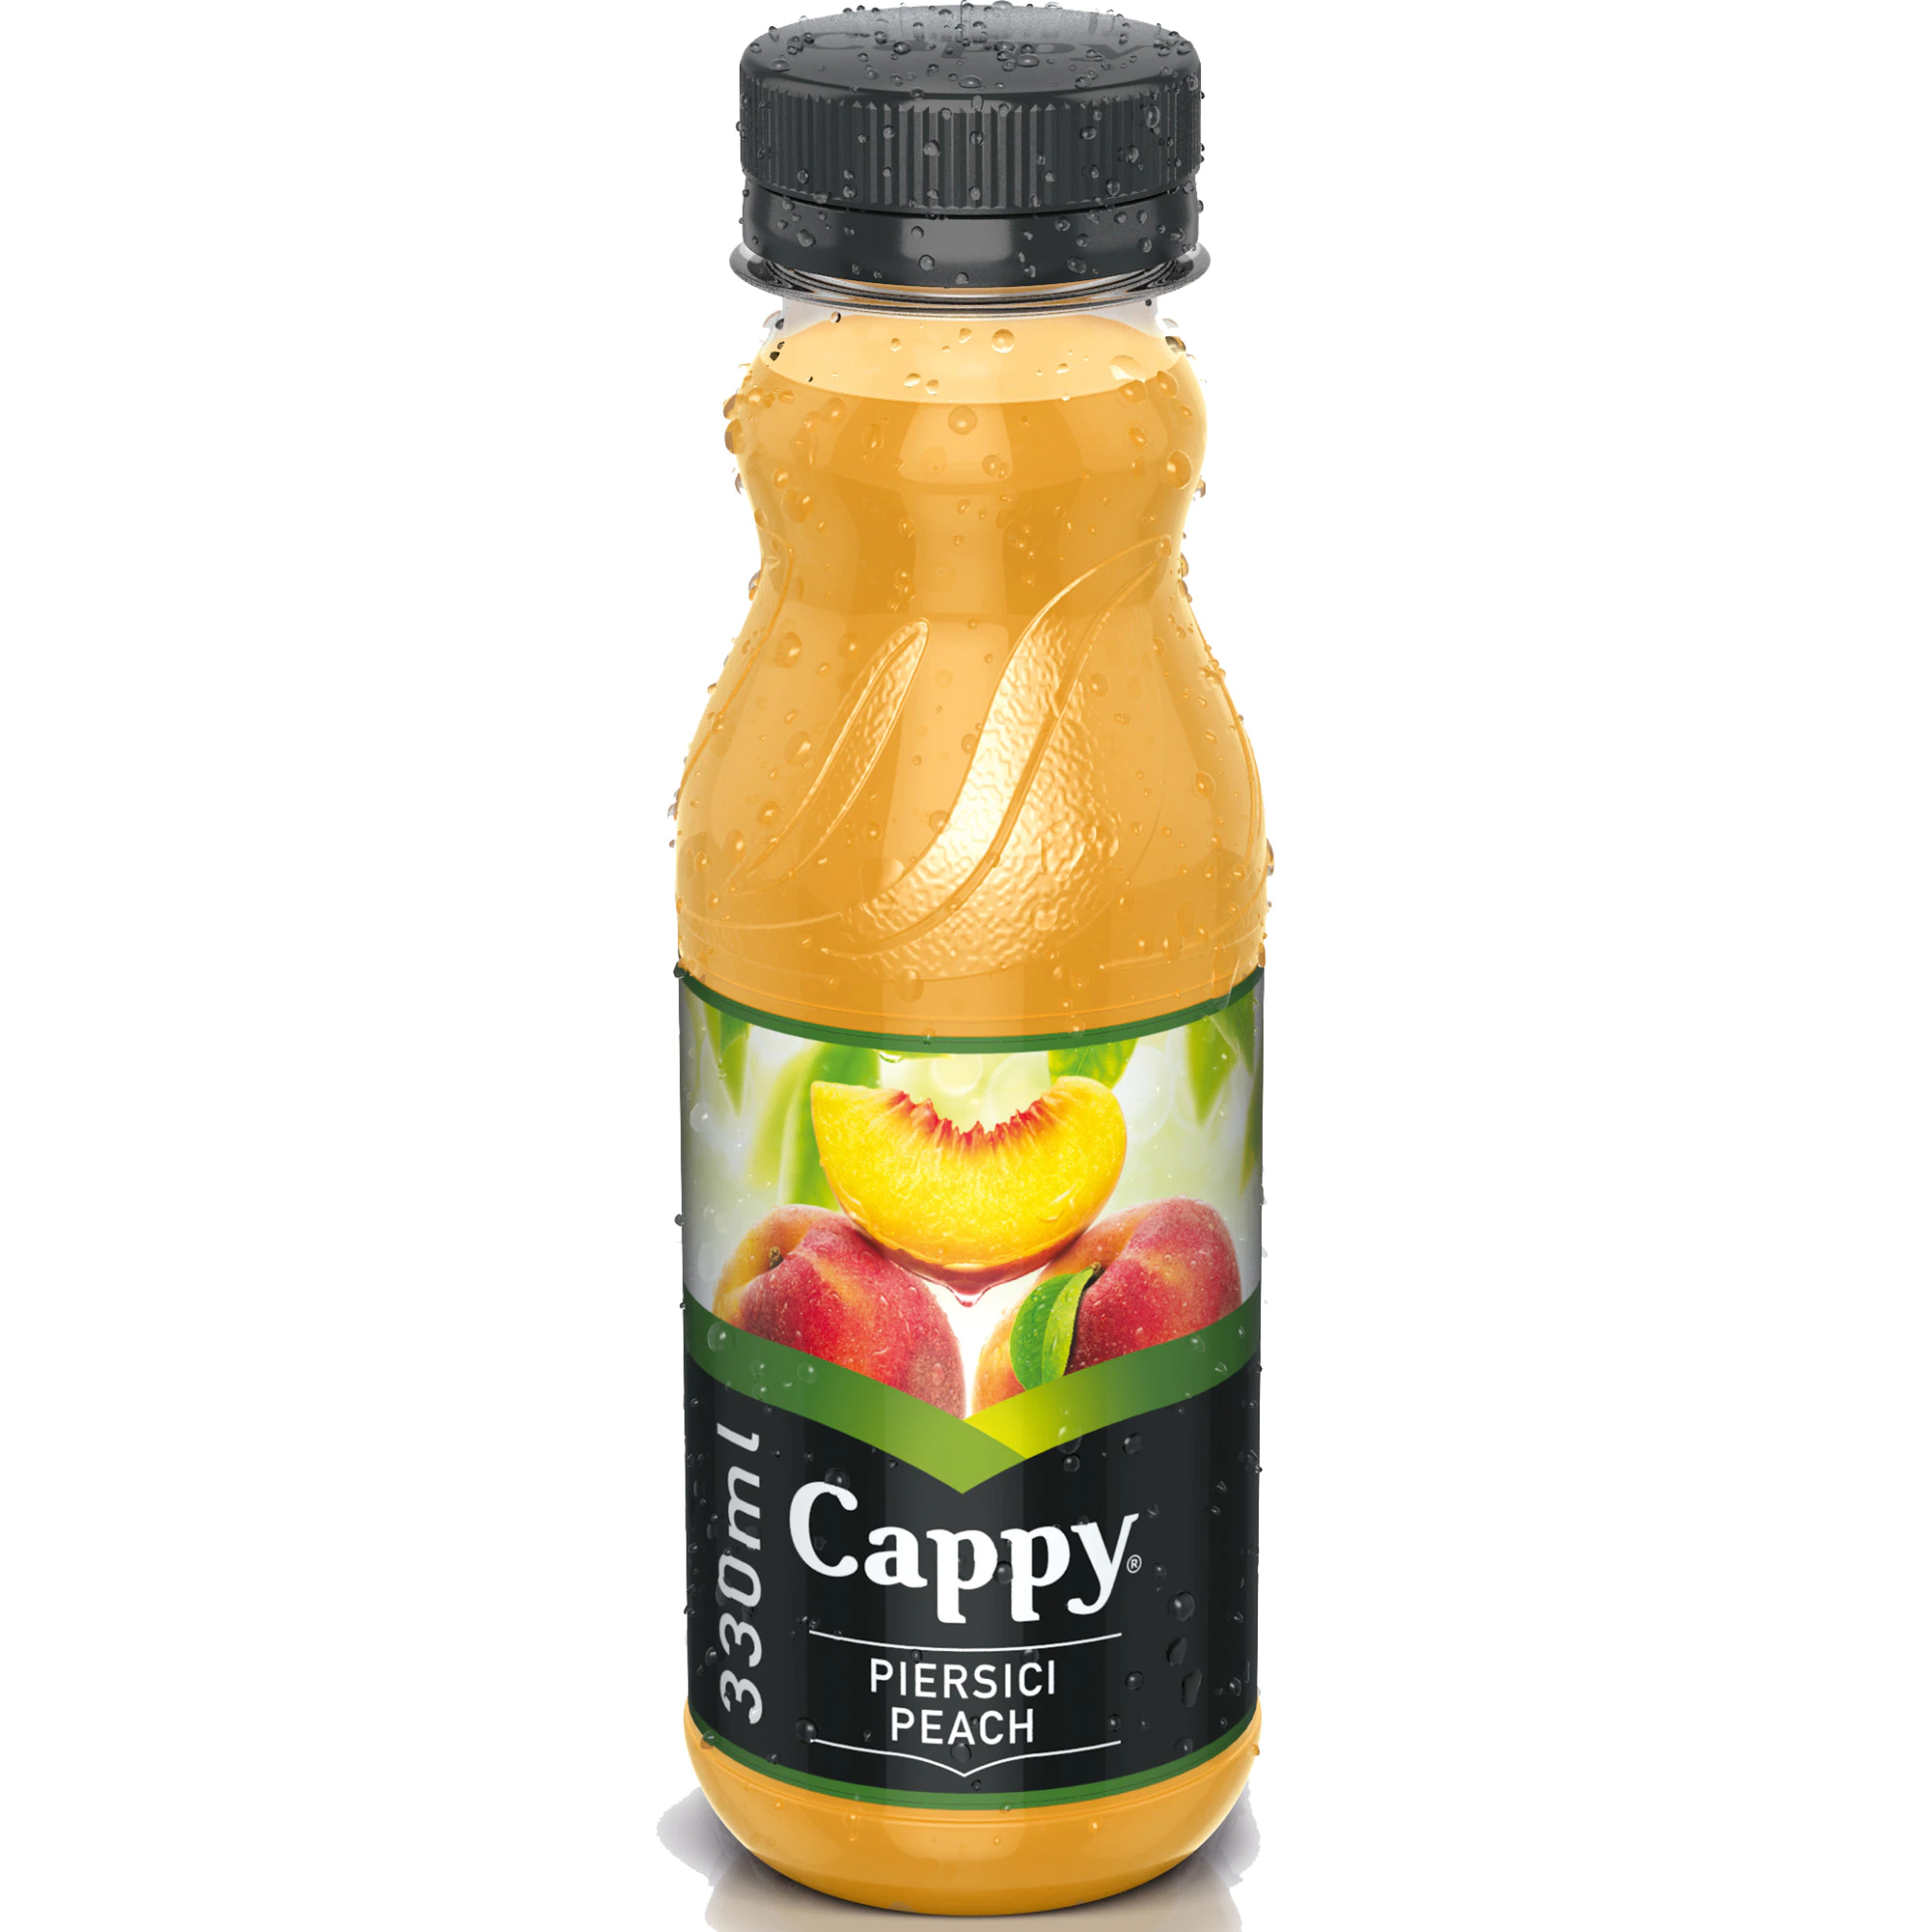 Cappy nectar de piersici/ Peach nectar image